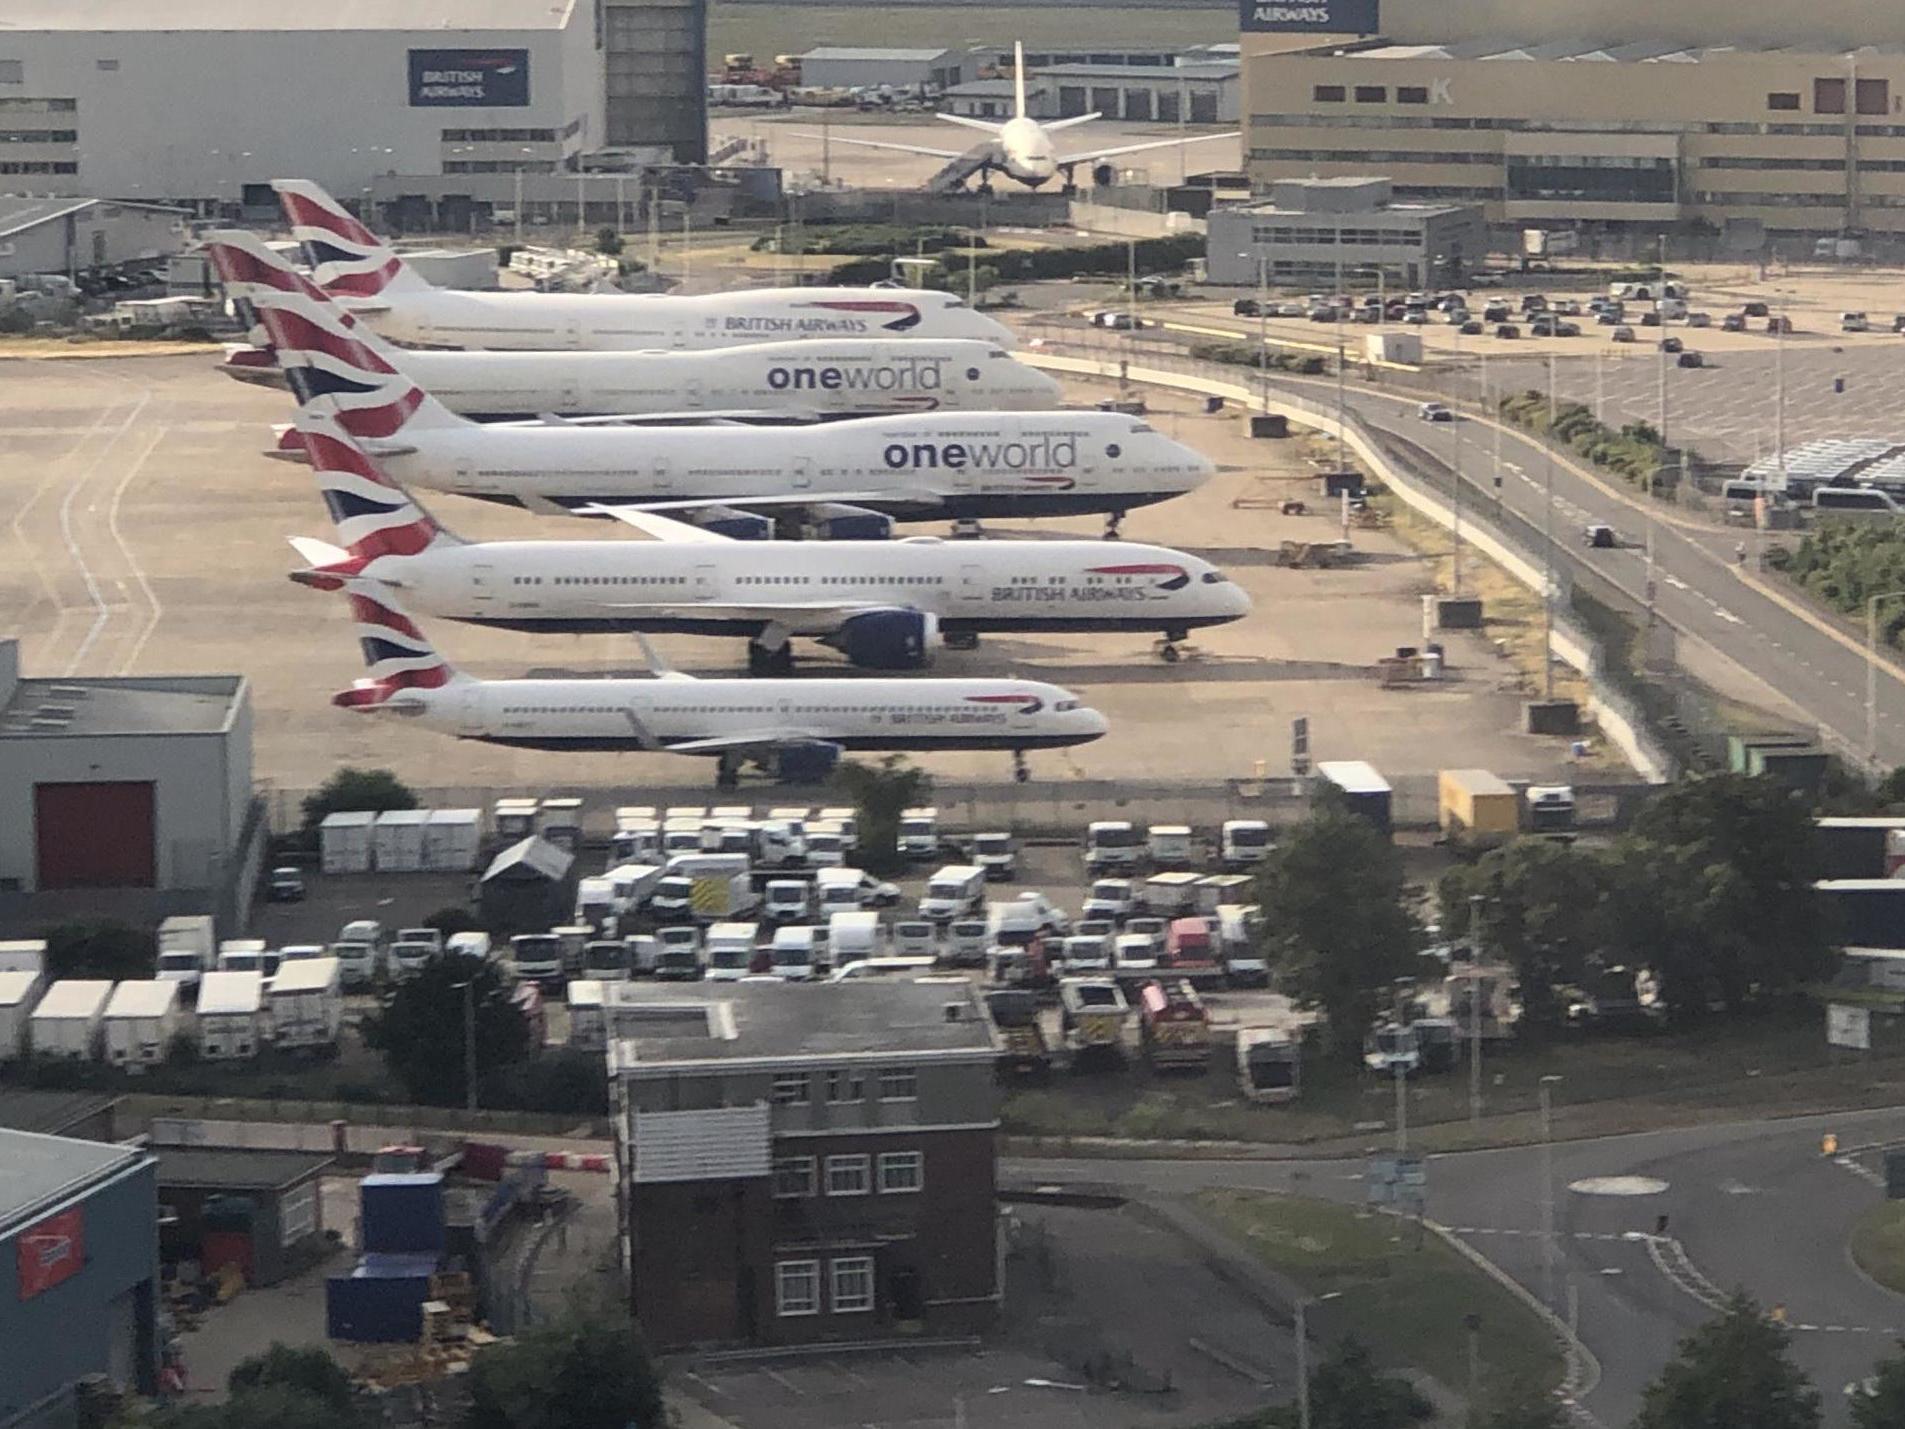 Standing idle: British Airways planes parked at Heathrow airport